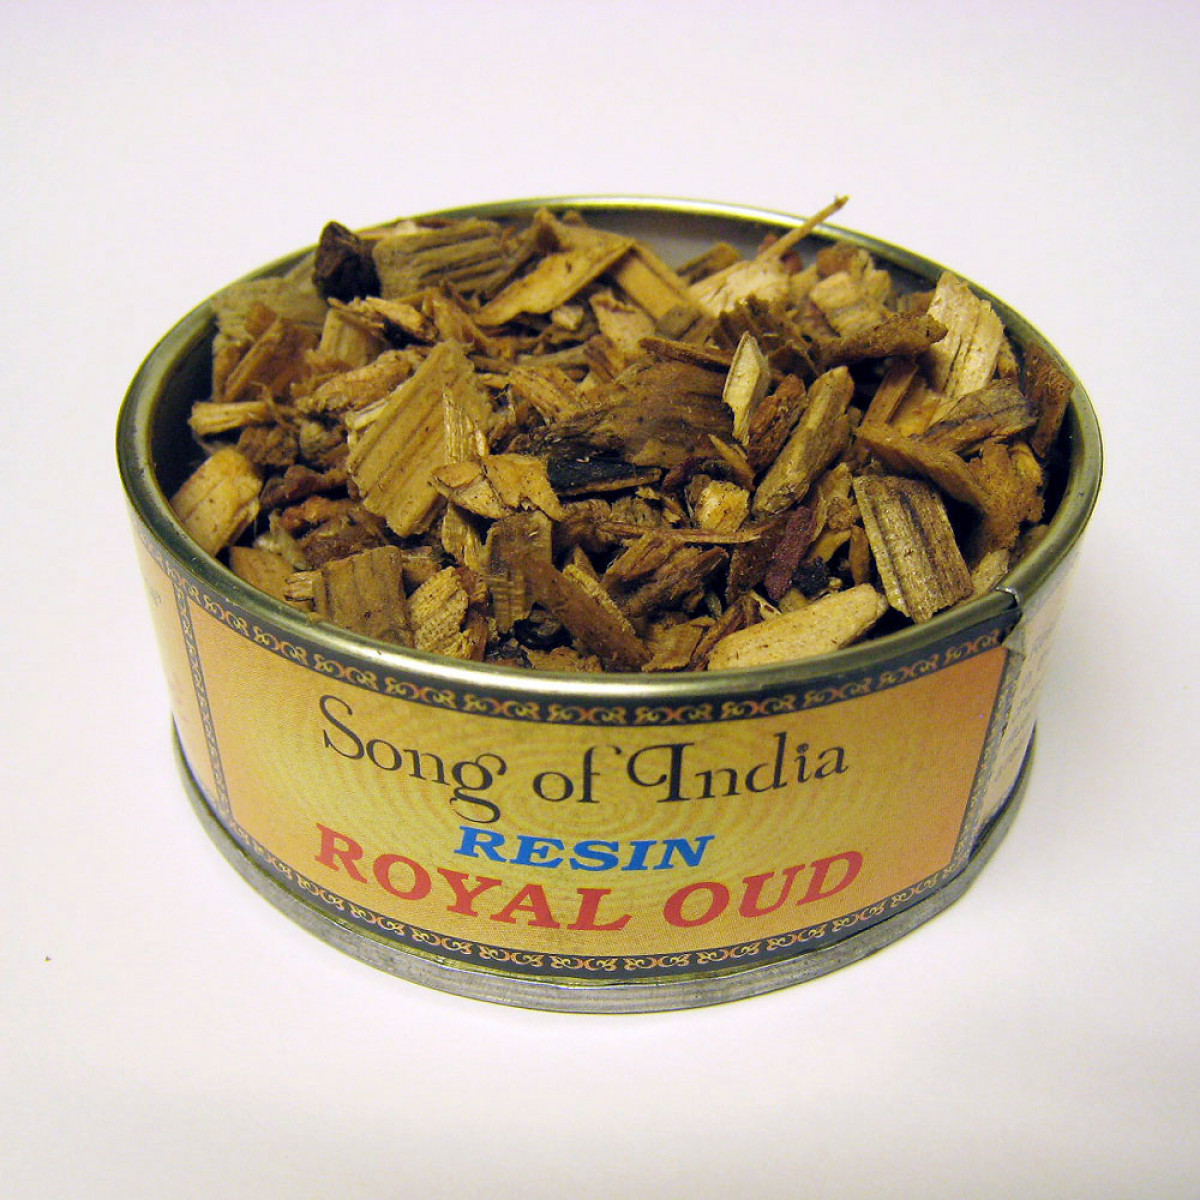 Smoking Royal Out / 2-Pack